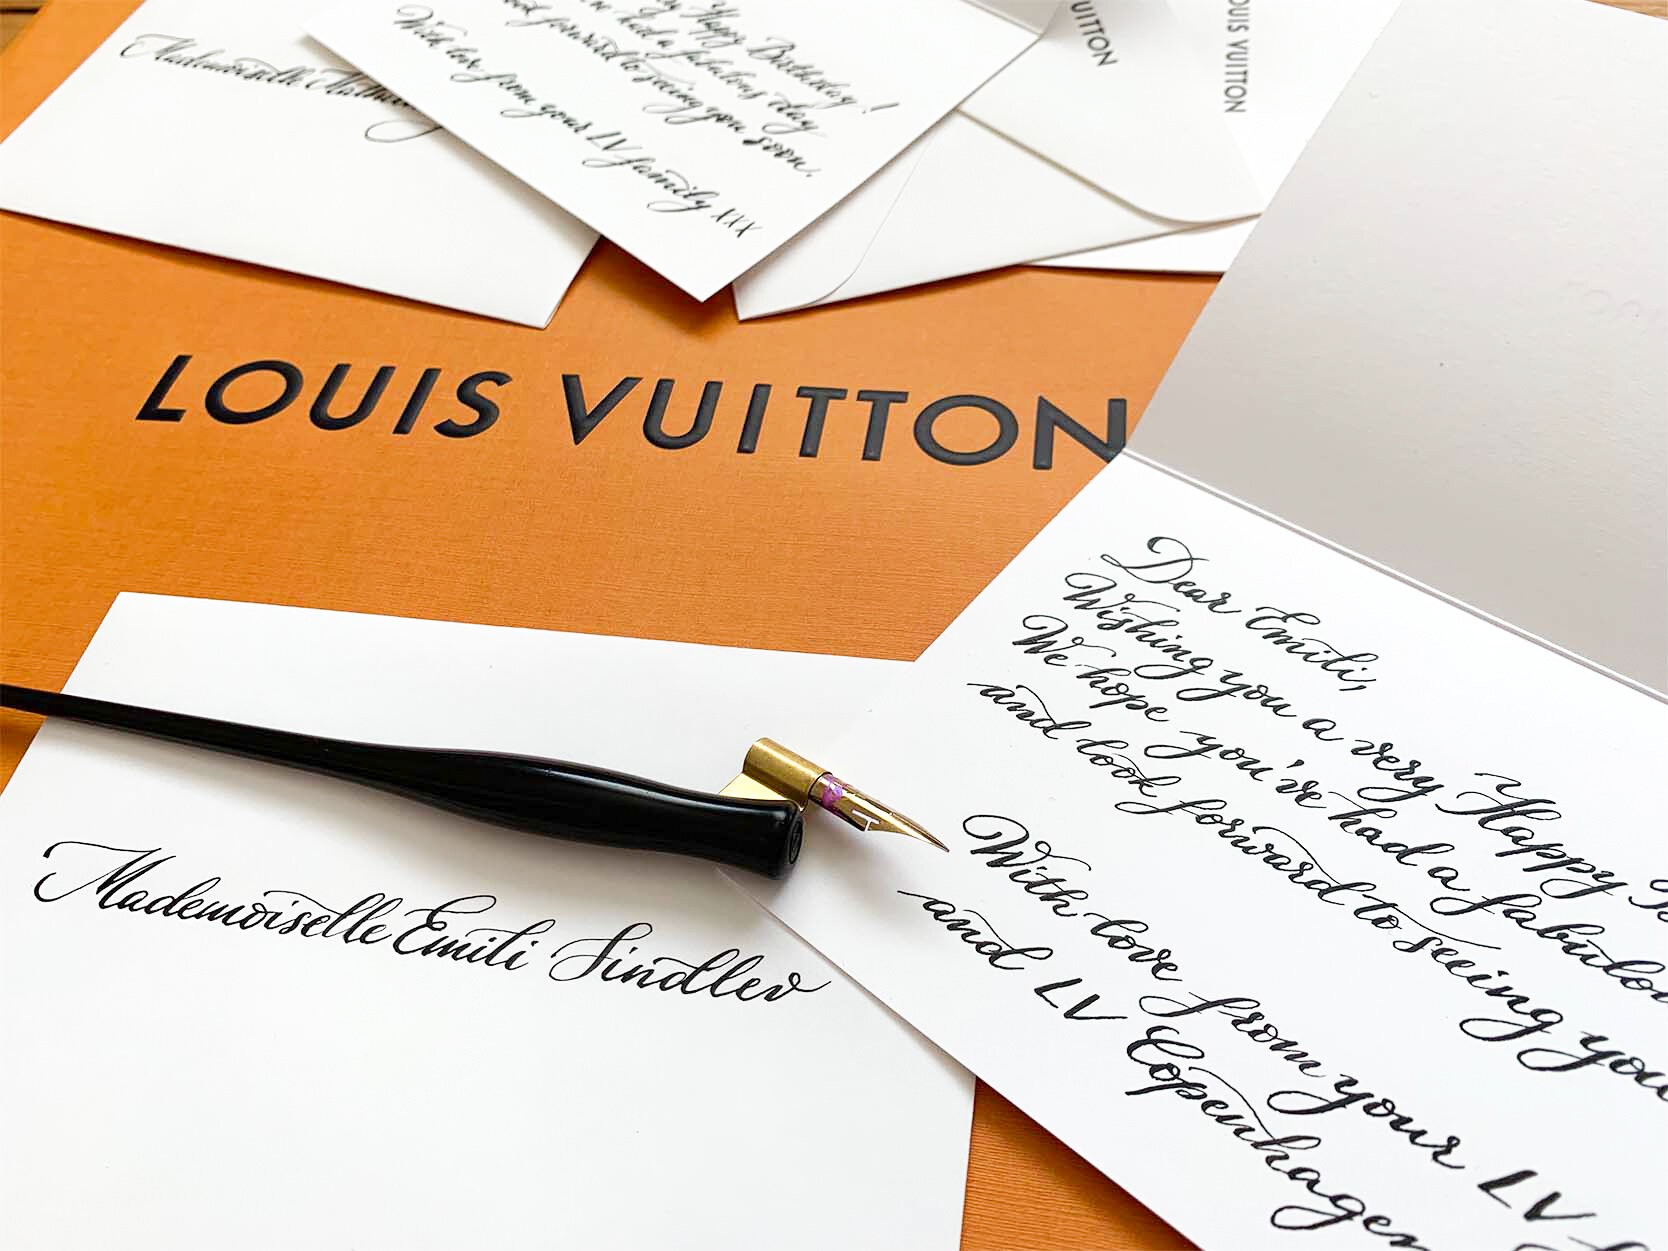 Louis Vuitton, Other, Louis Vuitton Greeting Card